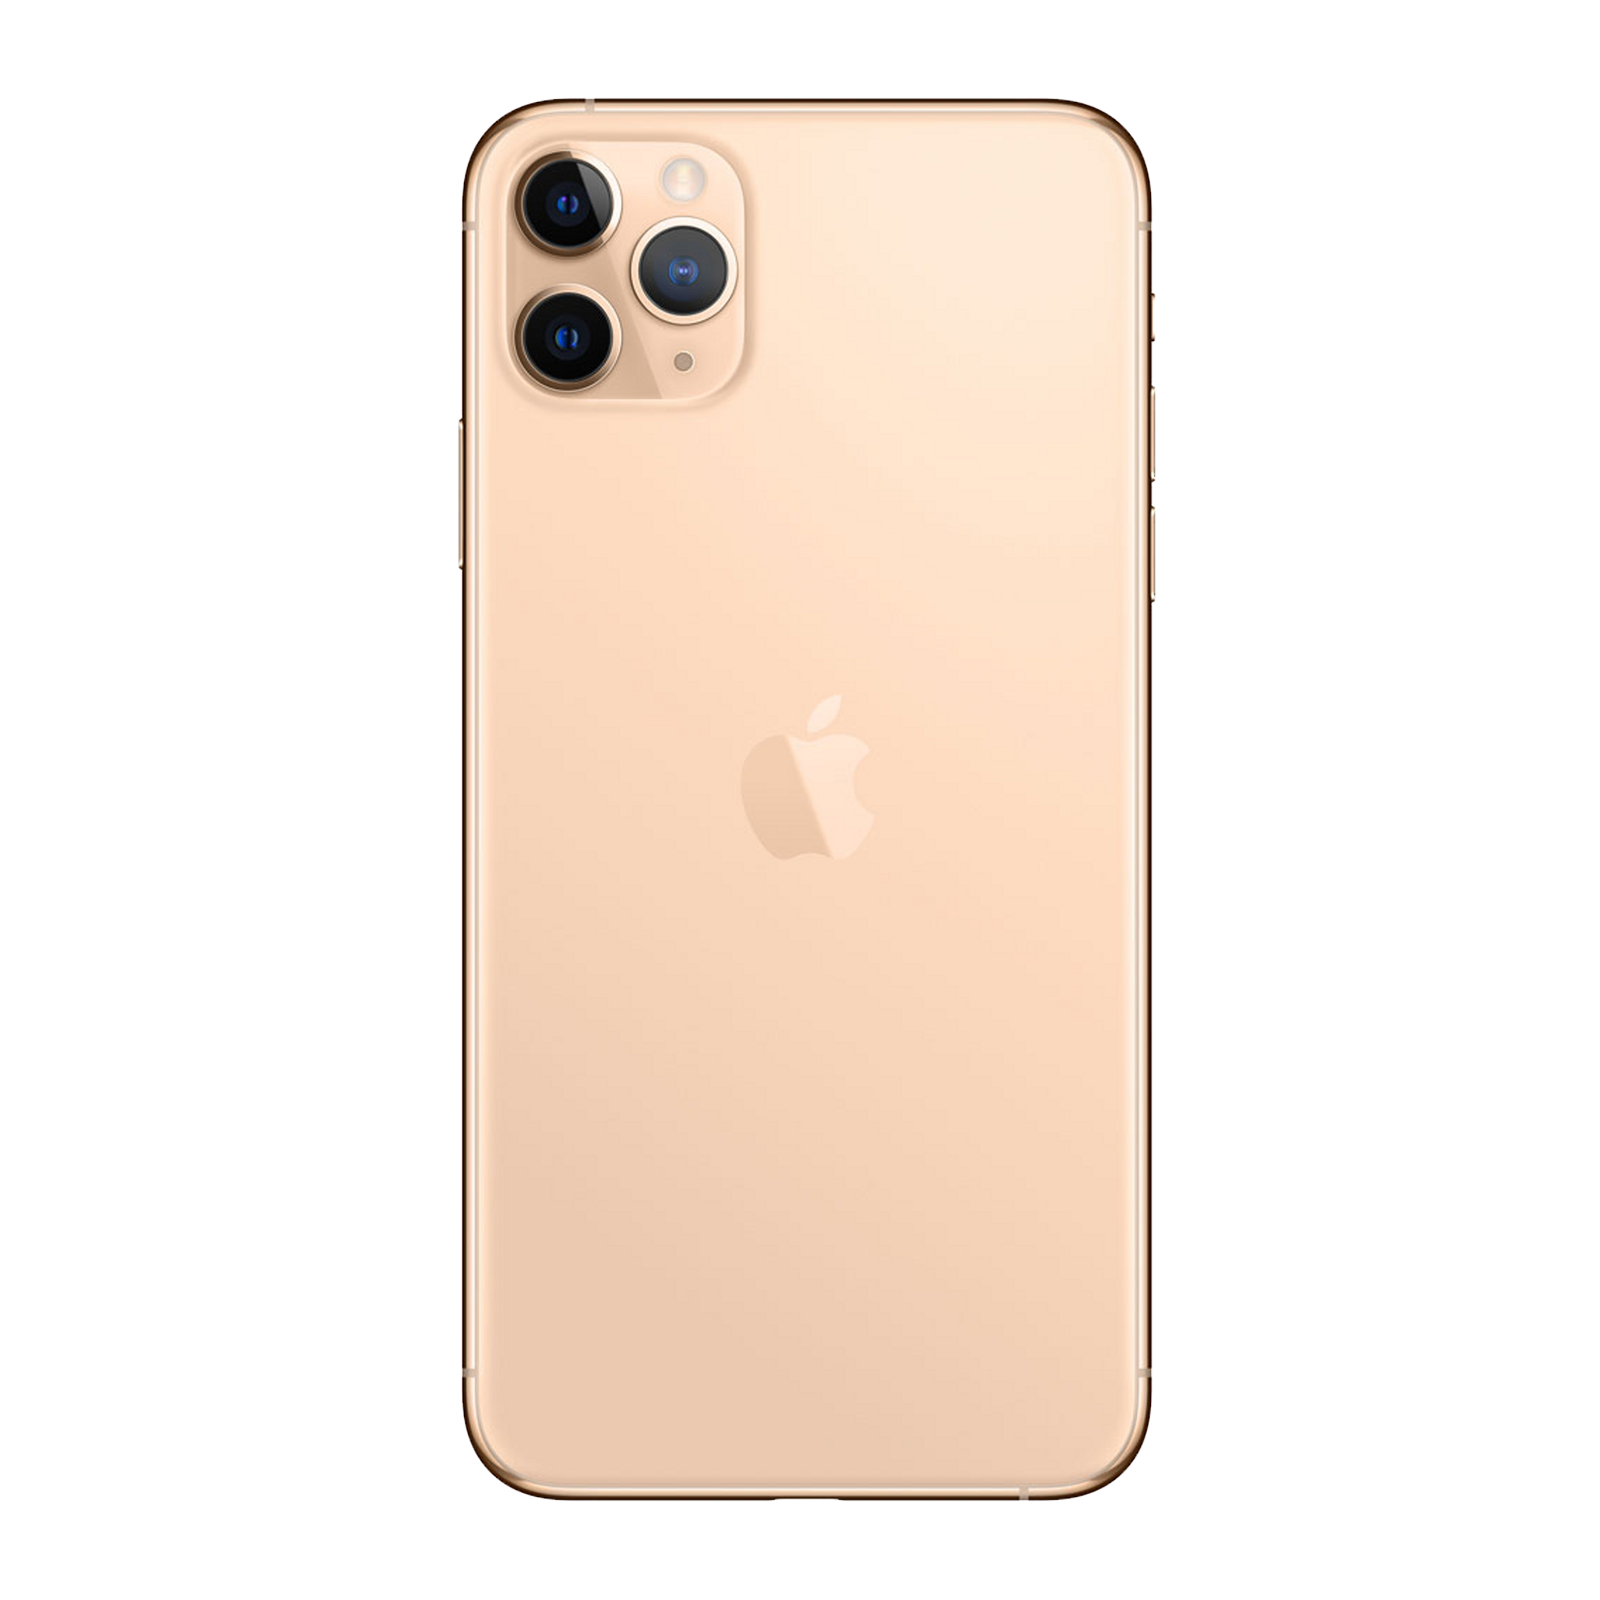 Apple iPhone 11 Pro Max 512GB Gold Good - Verizon